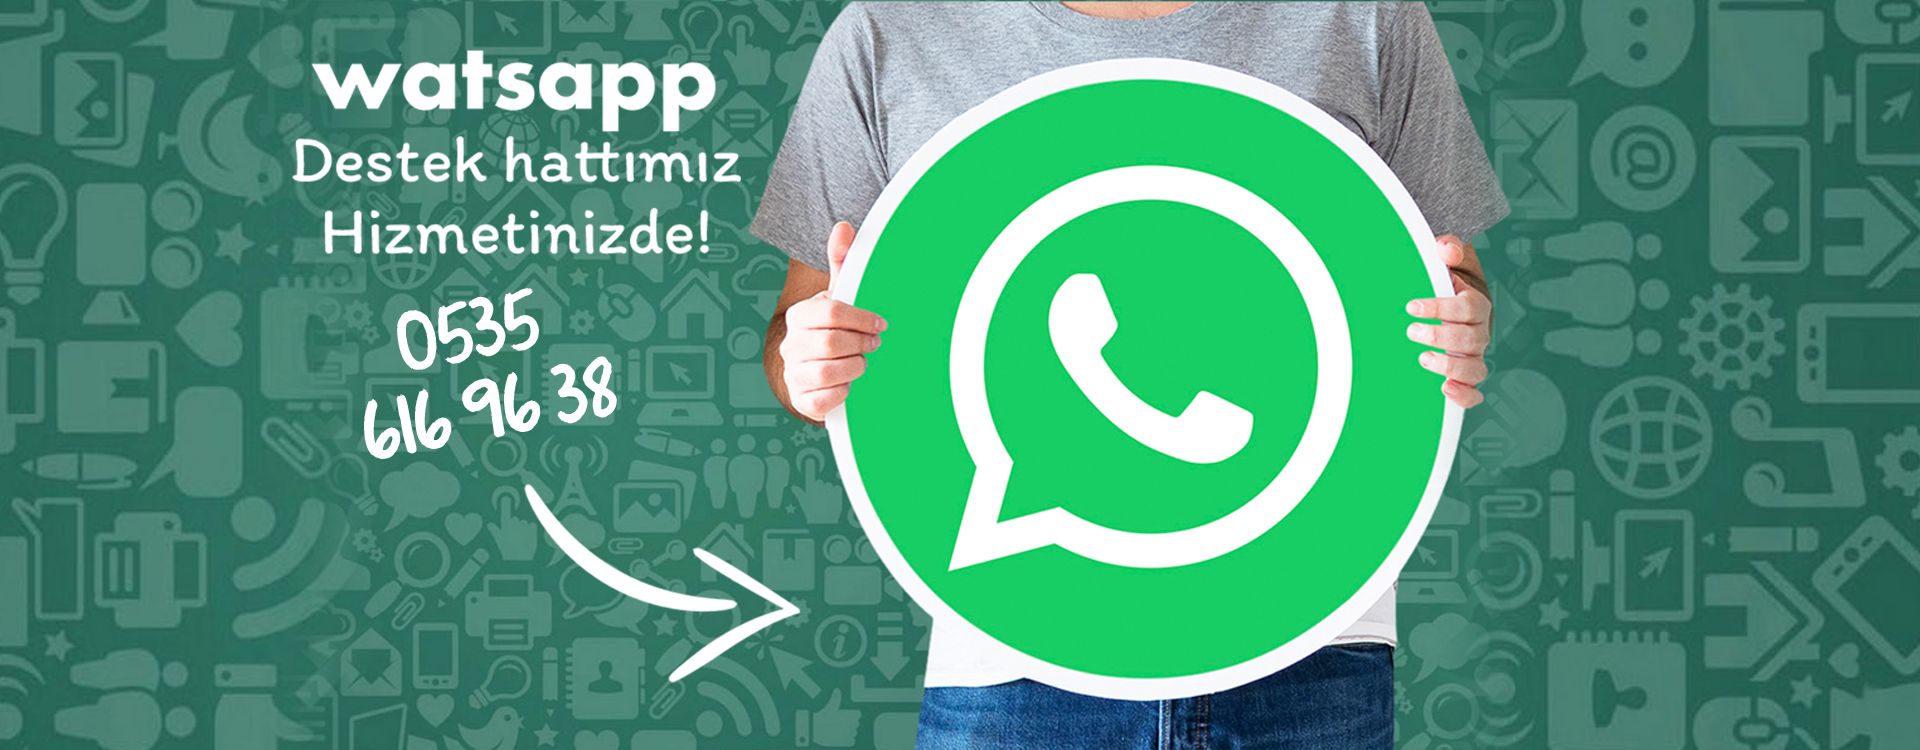 Whatsapp destek hattımız hizmetinizde